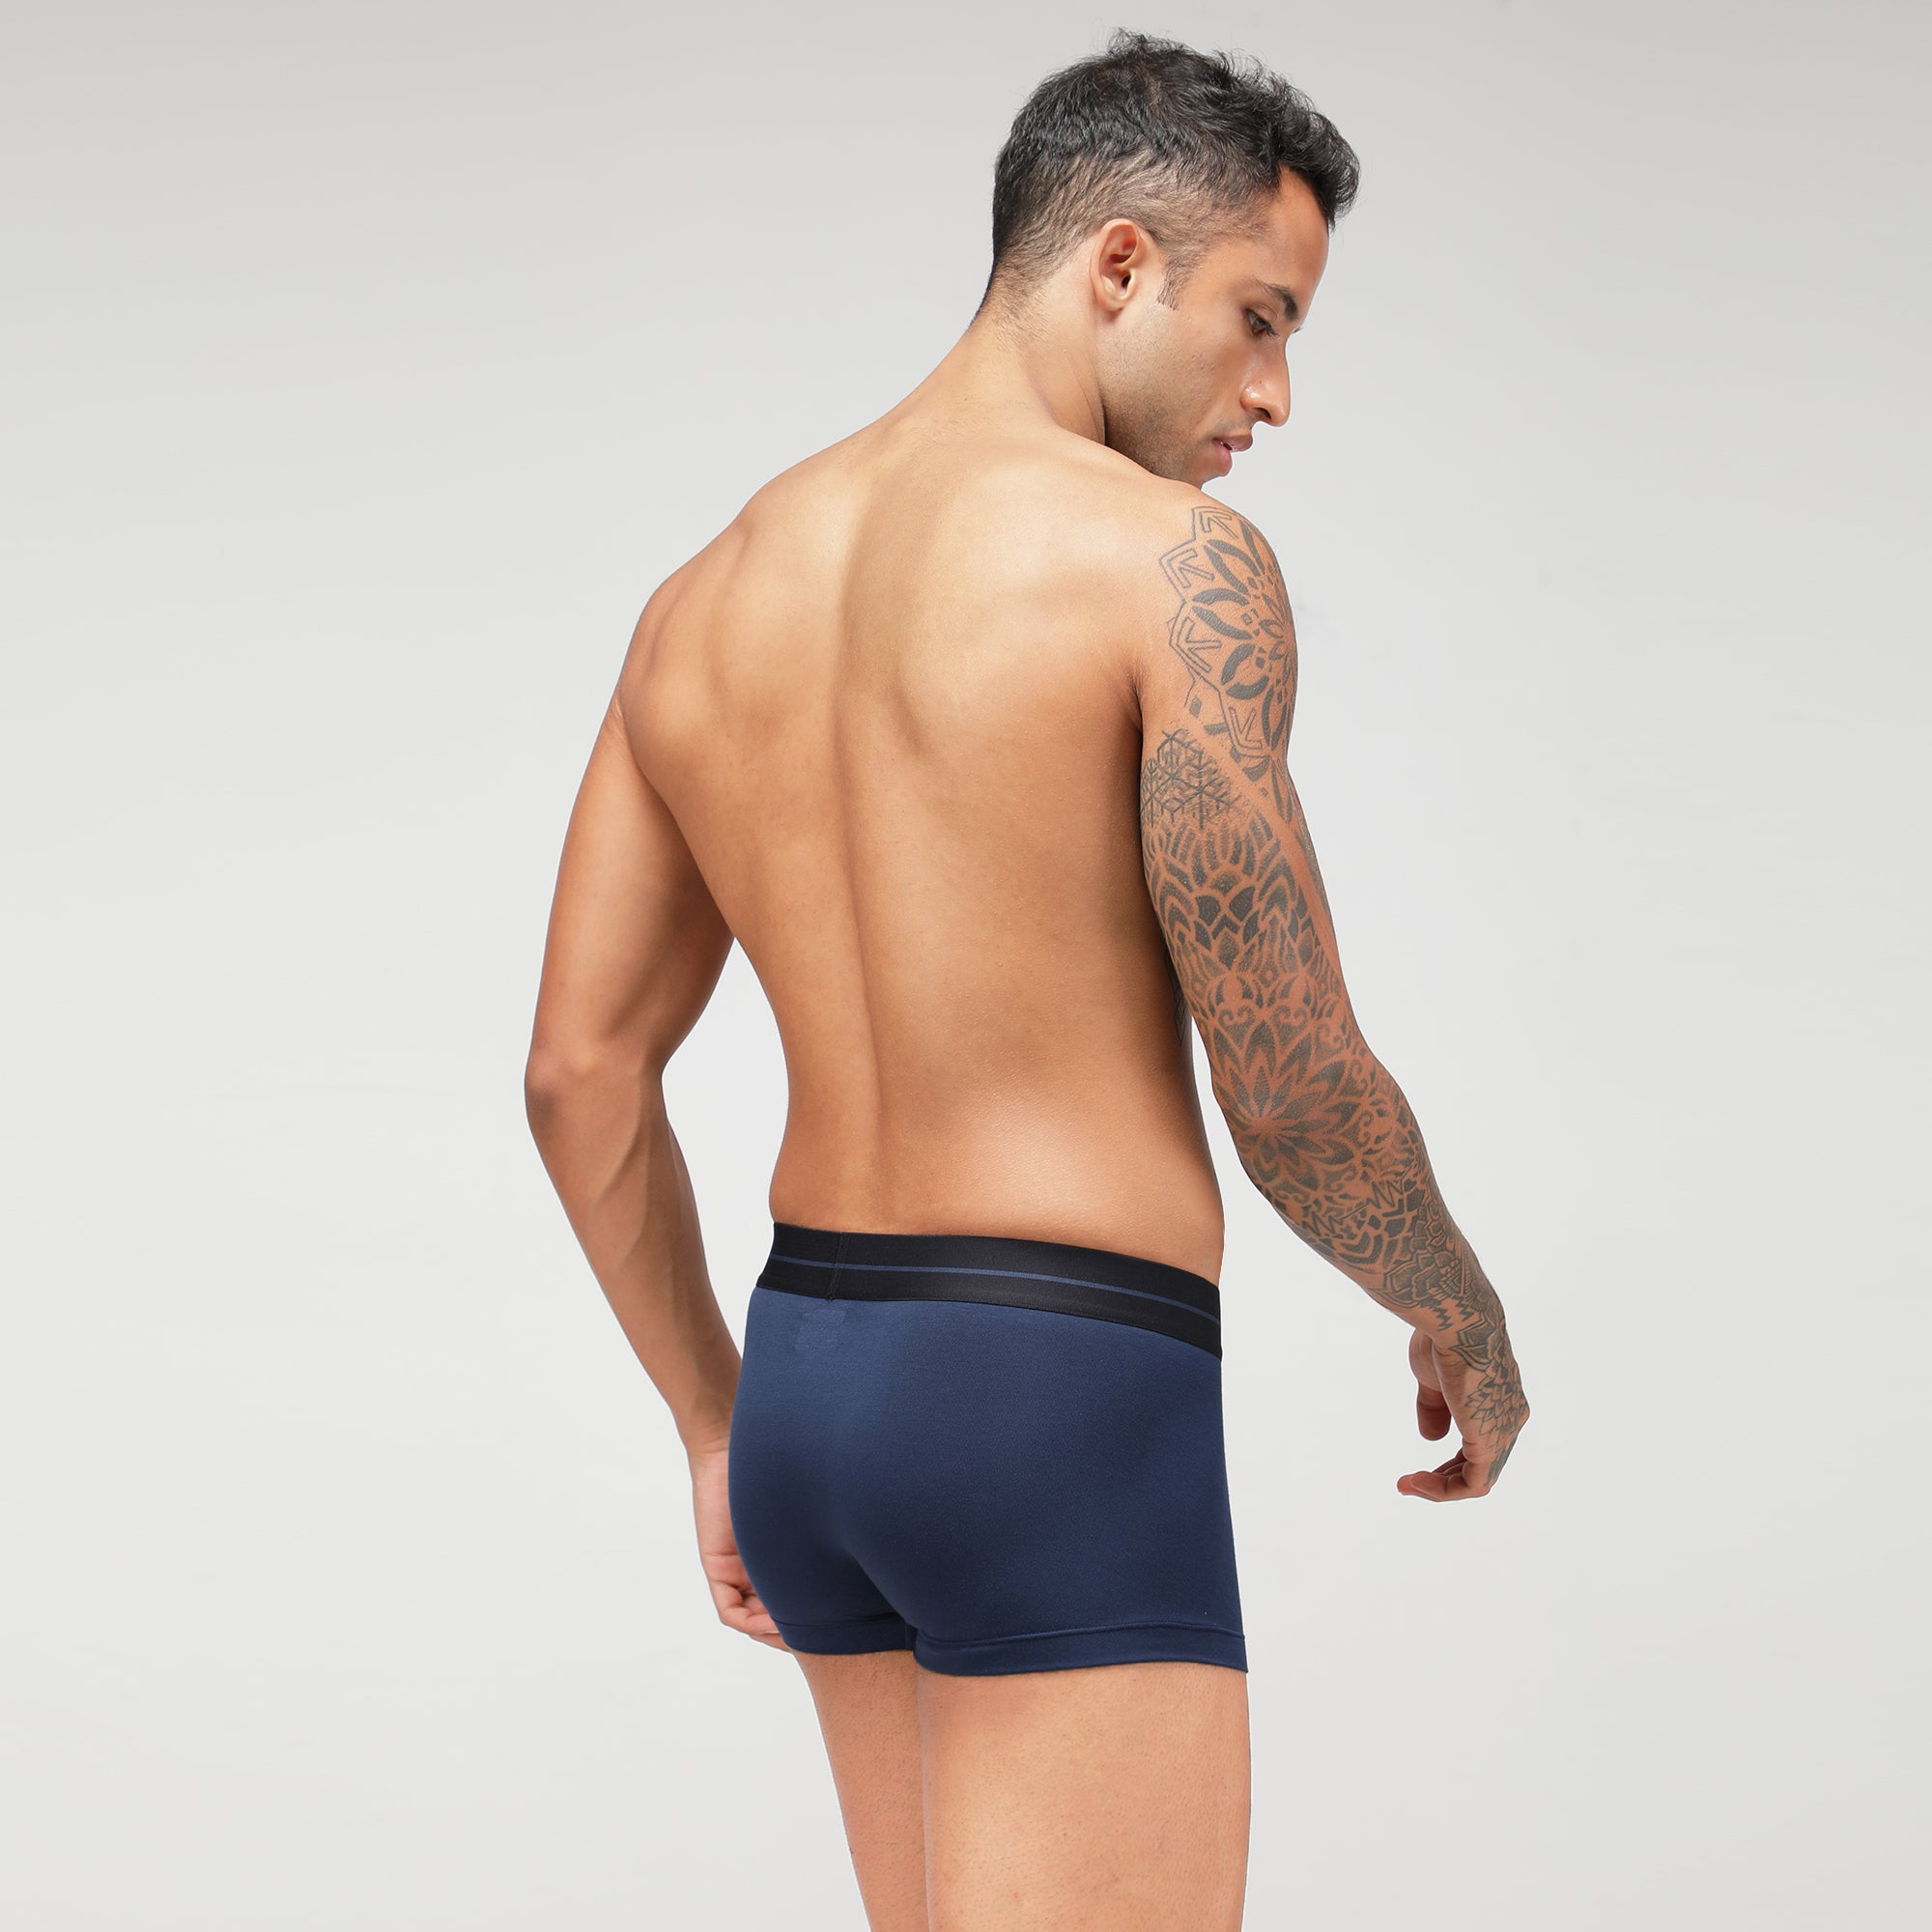 Modal Trunk Premium Underwear, Type: Trunks at Rs 225/piece in